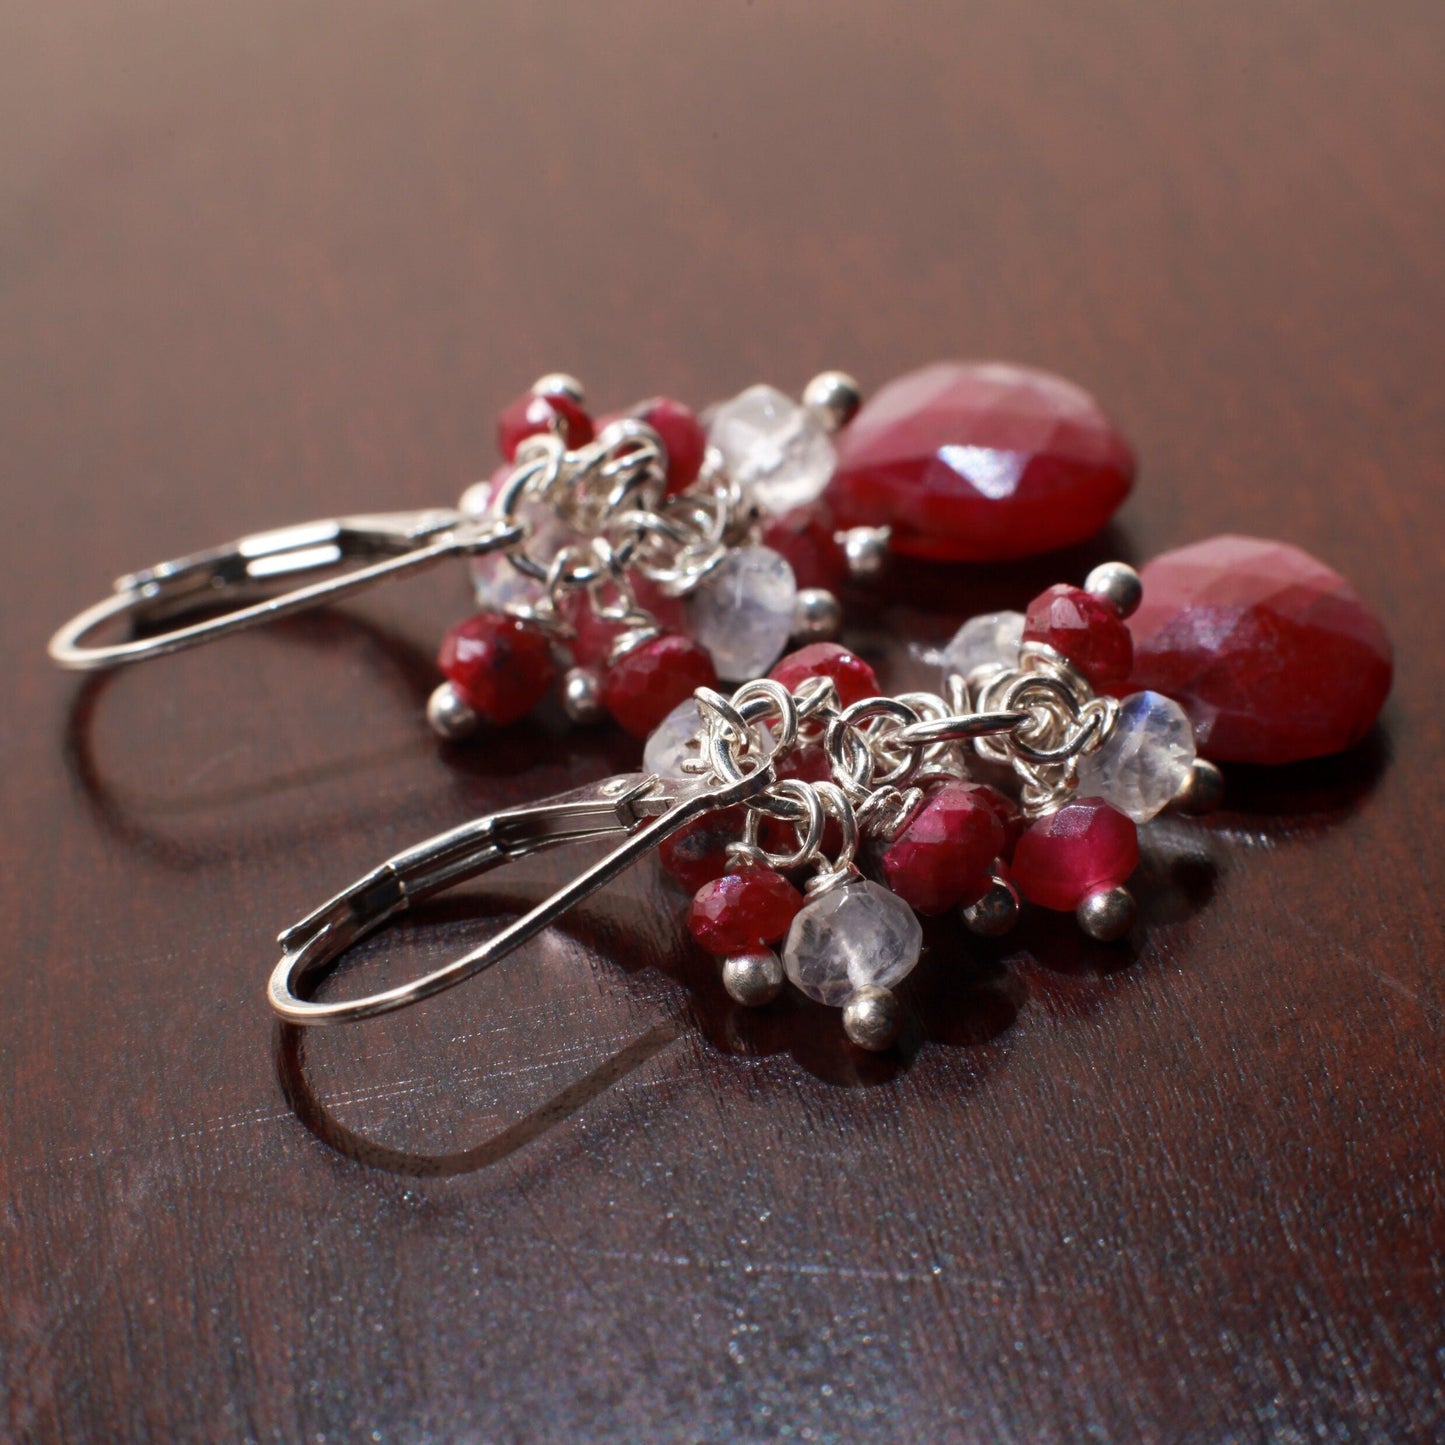 Genuine Ruby Heart Briolette Teardrop, Genuine Ruby and Moonstone Clusters in .925 Sterling Silver Leverback Earrings, Gemstone Jewelry Gift